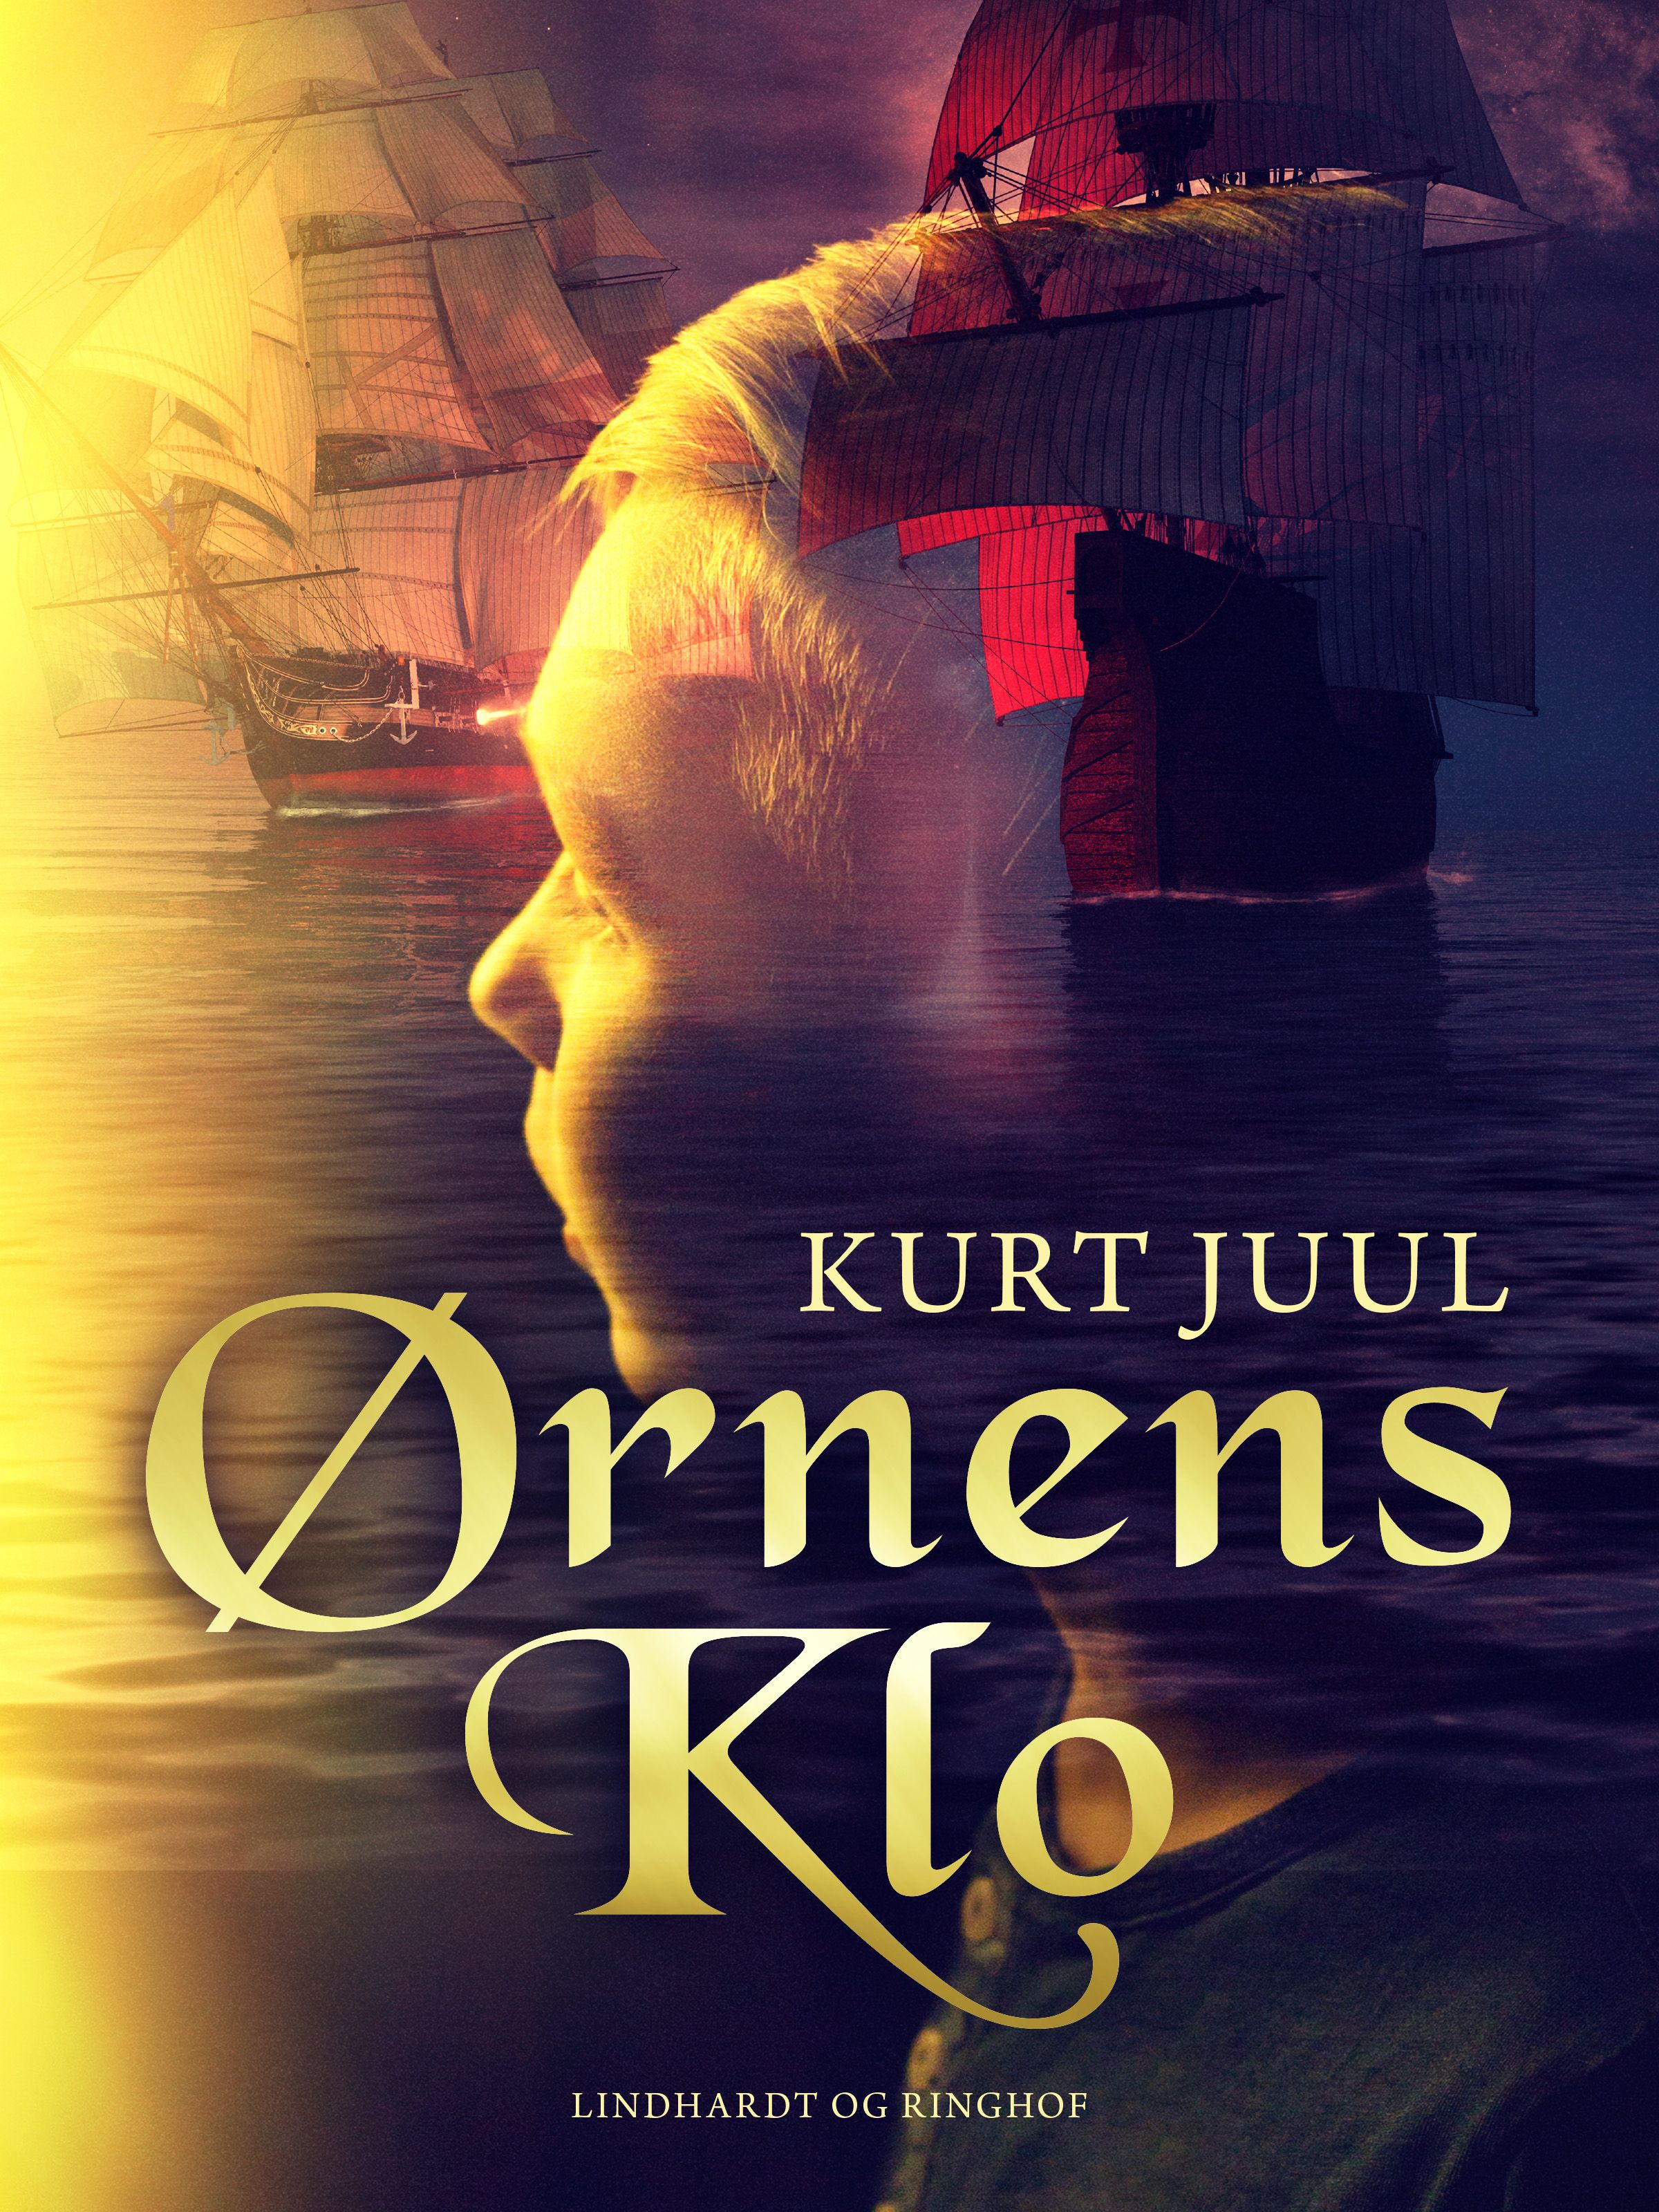 Ørnens klo, eBook by Kurt Juul